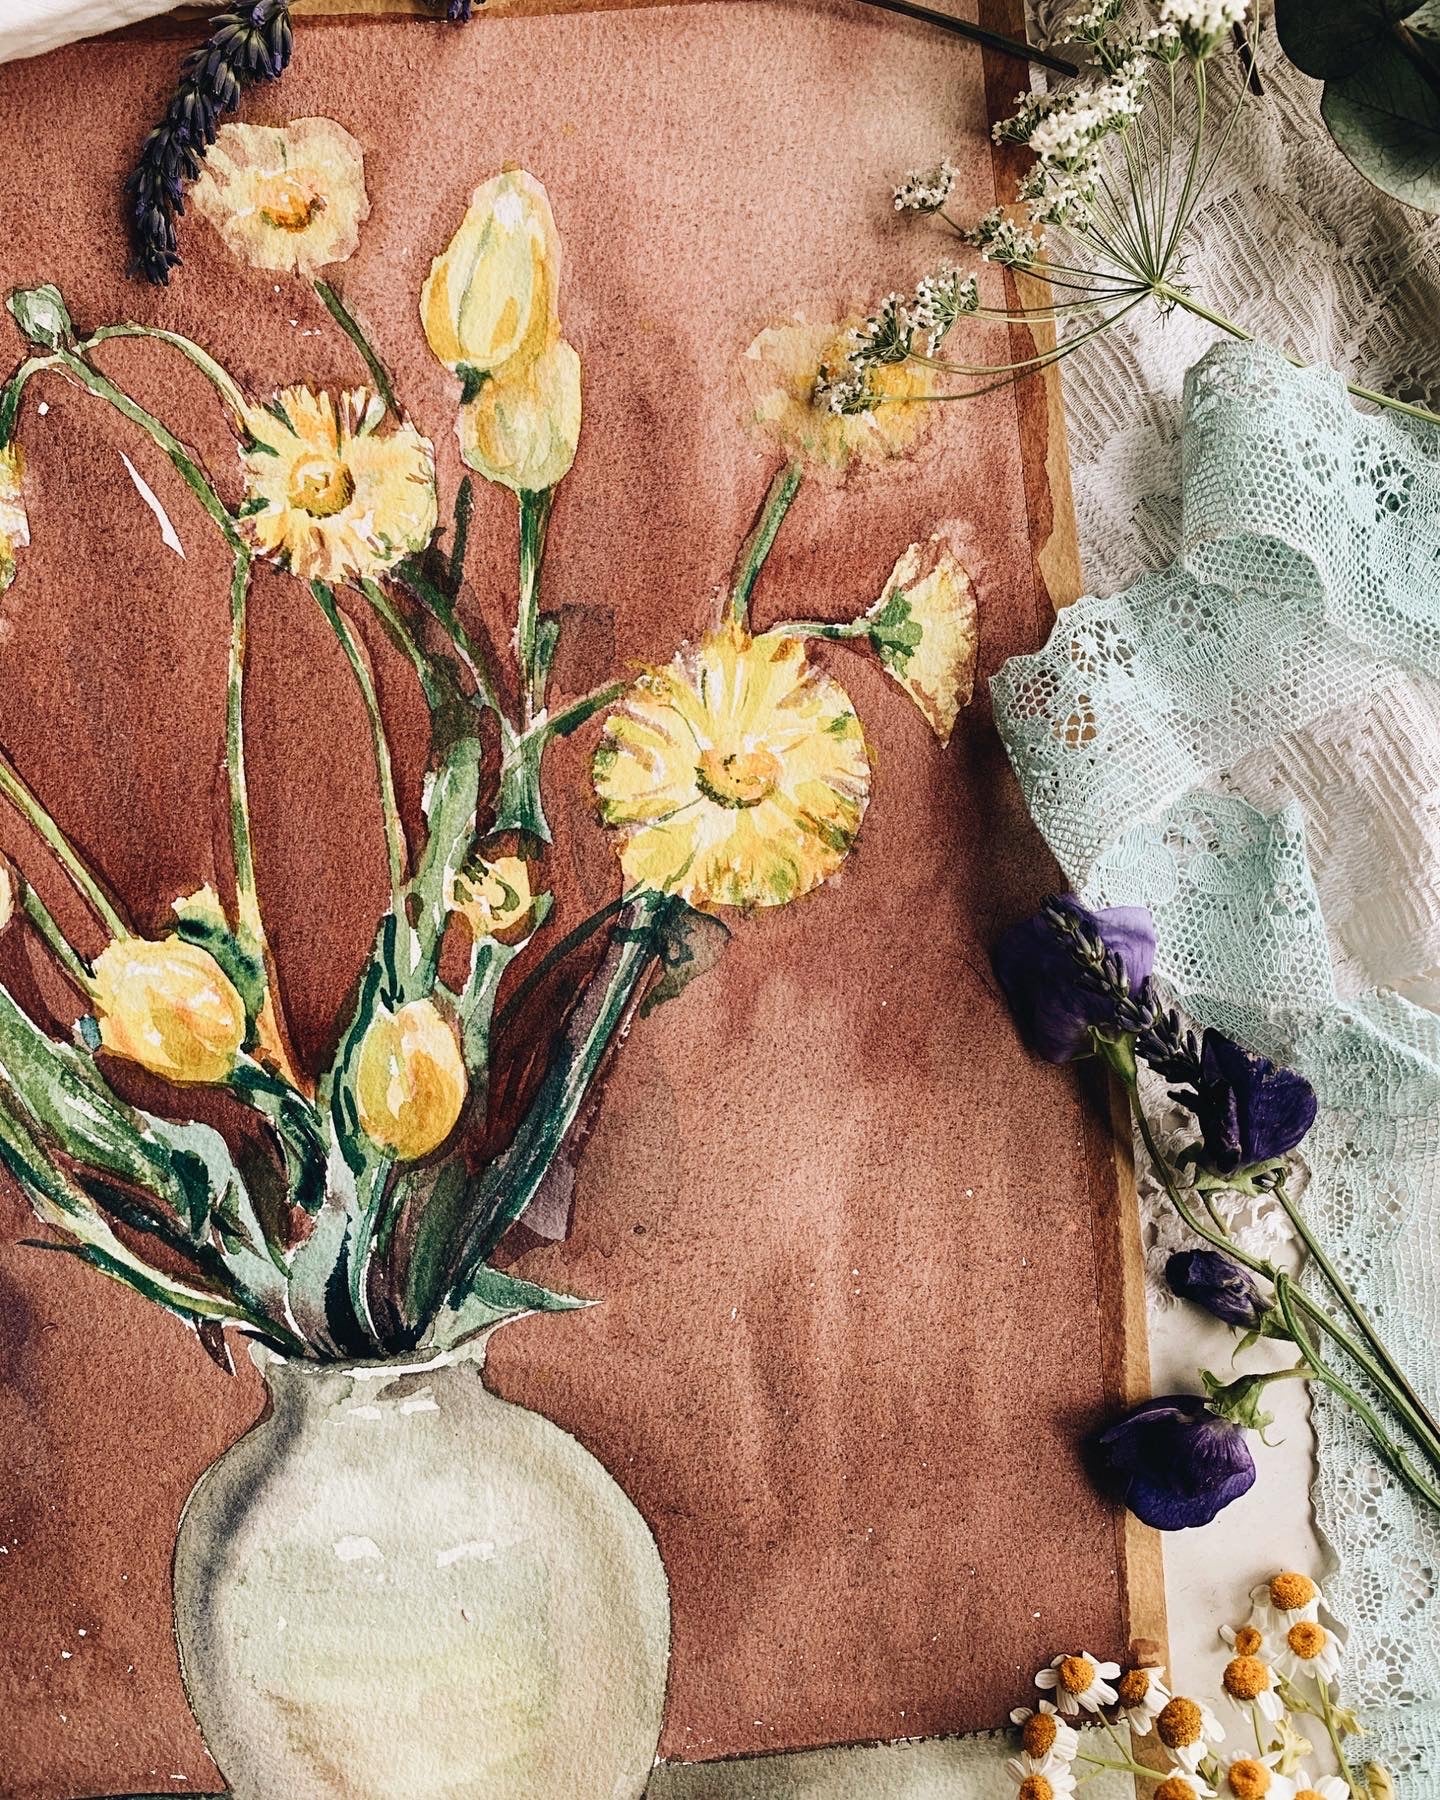 Vintage 1950’s Floral Watercolour Blooms in Vase Painting